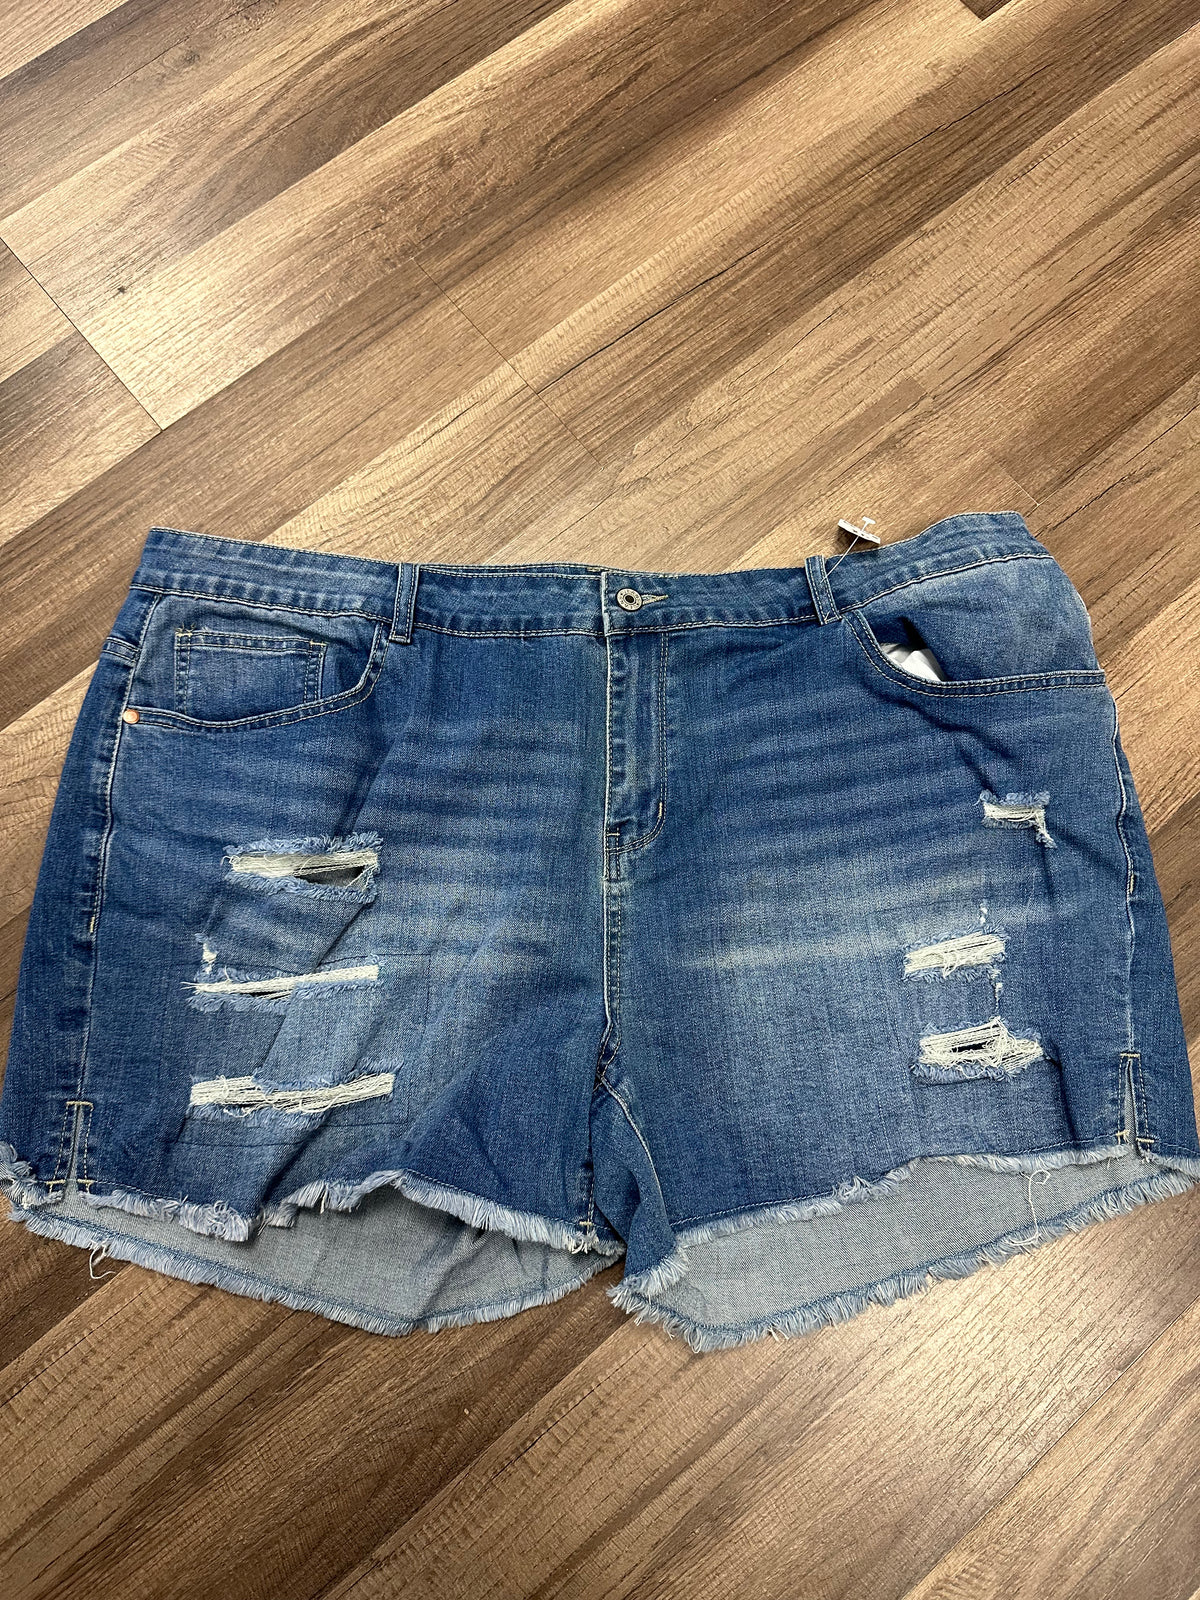 Plus Size Jean Shorts